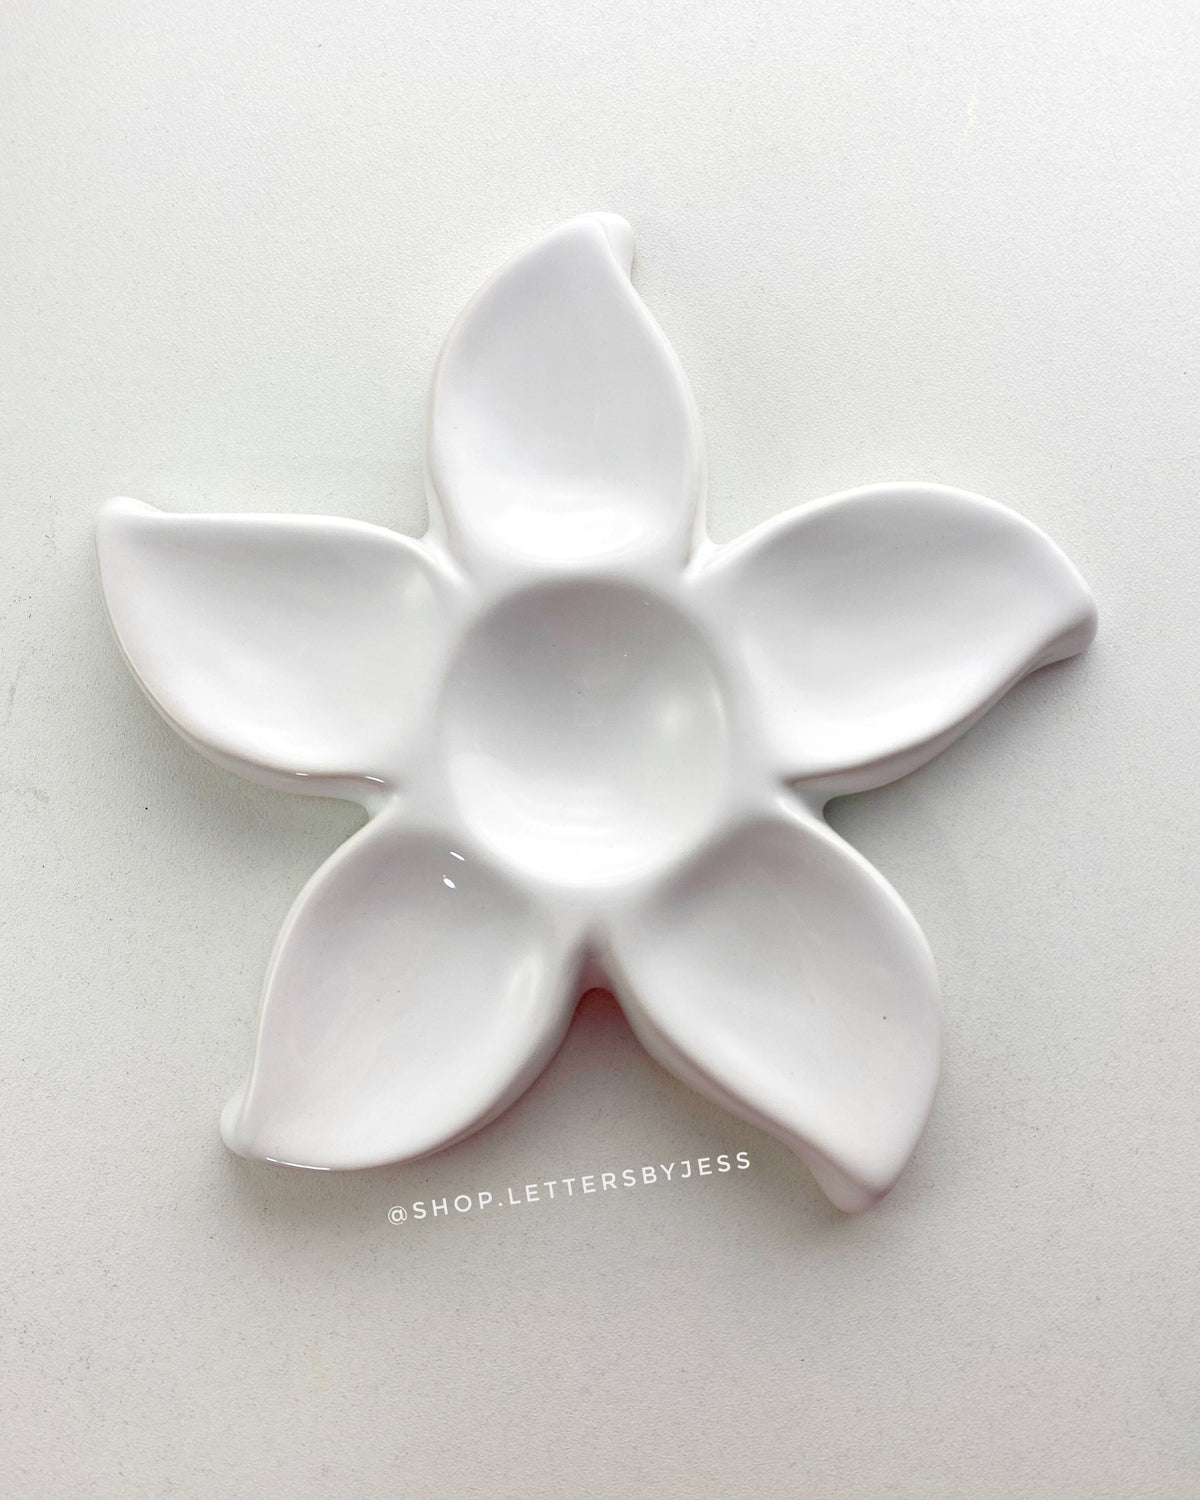 Paleta ceramica - Flor 5 petalos godete Otros